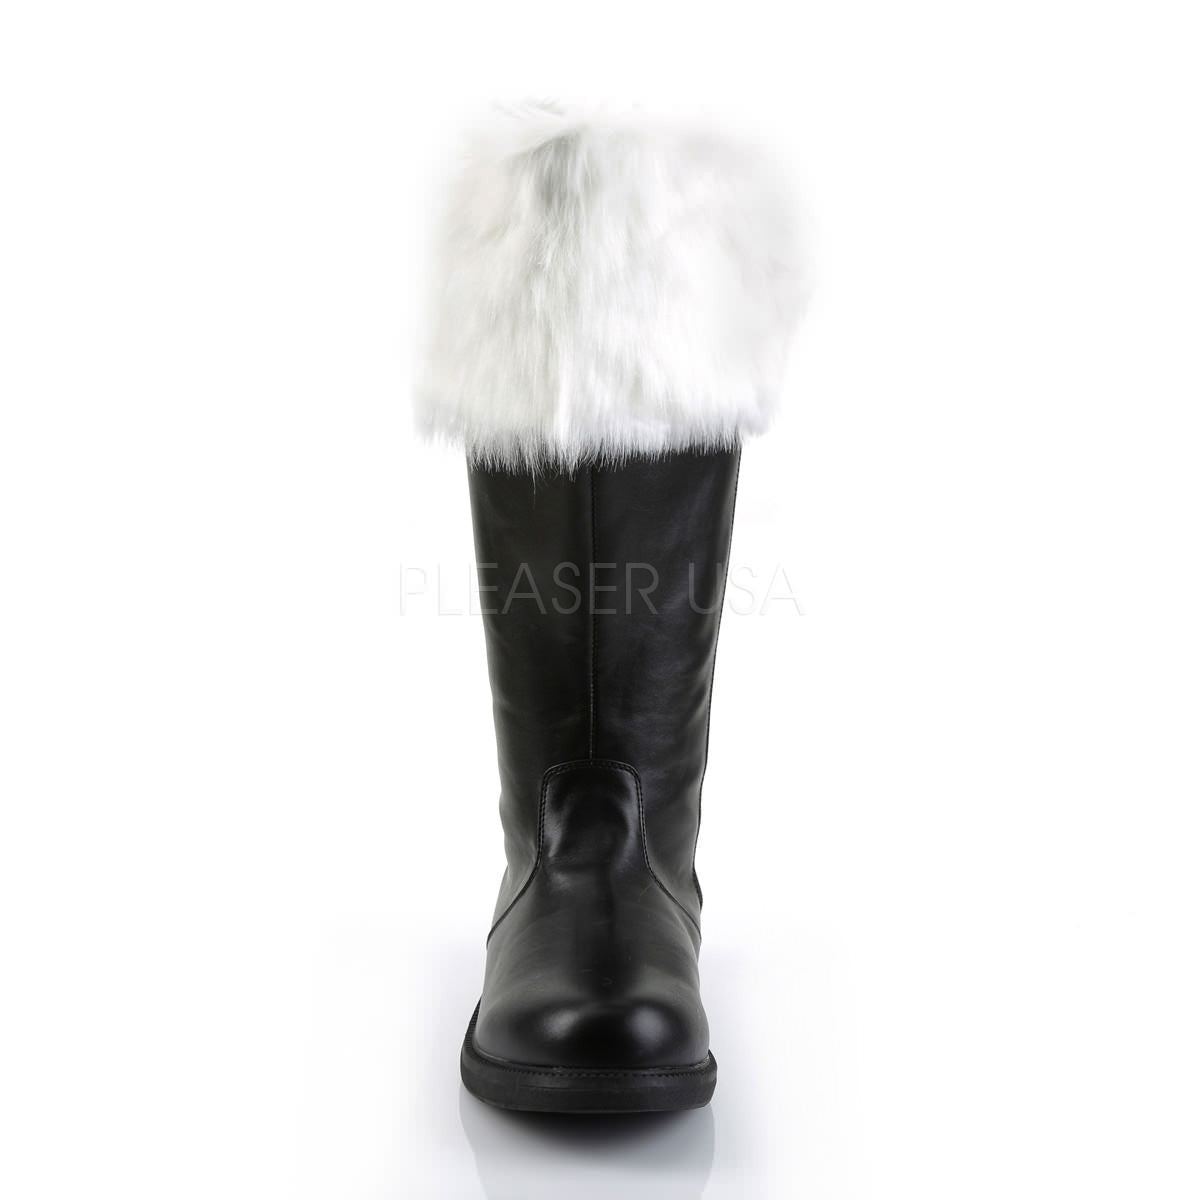 Men's Black Pu Wide Calf Santa Boots with White Faux Fur